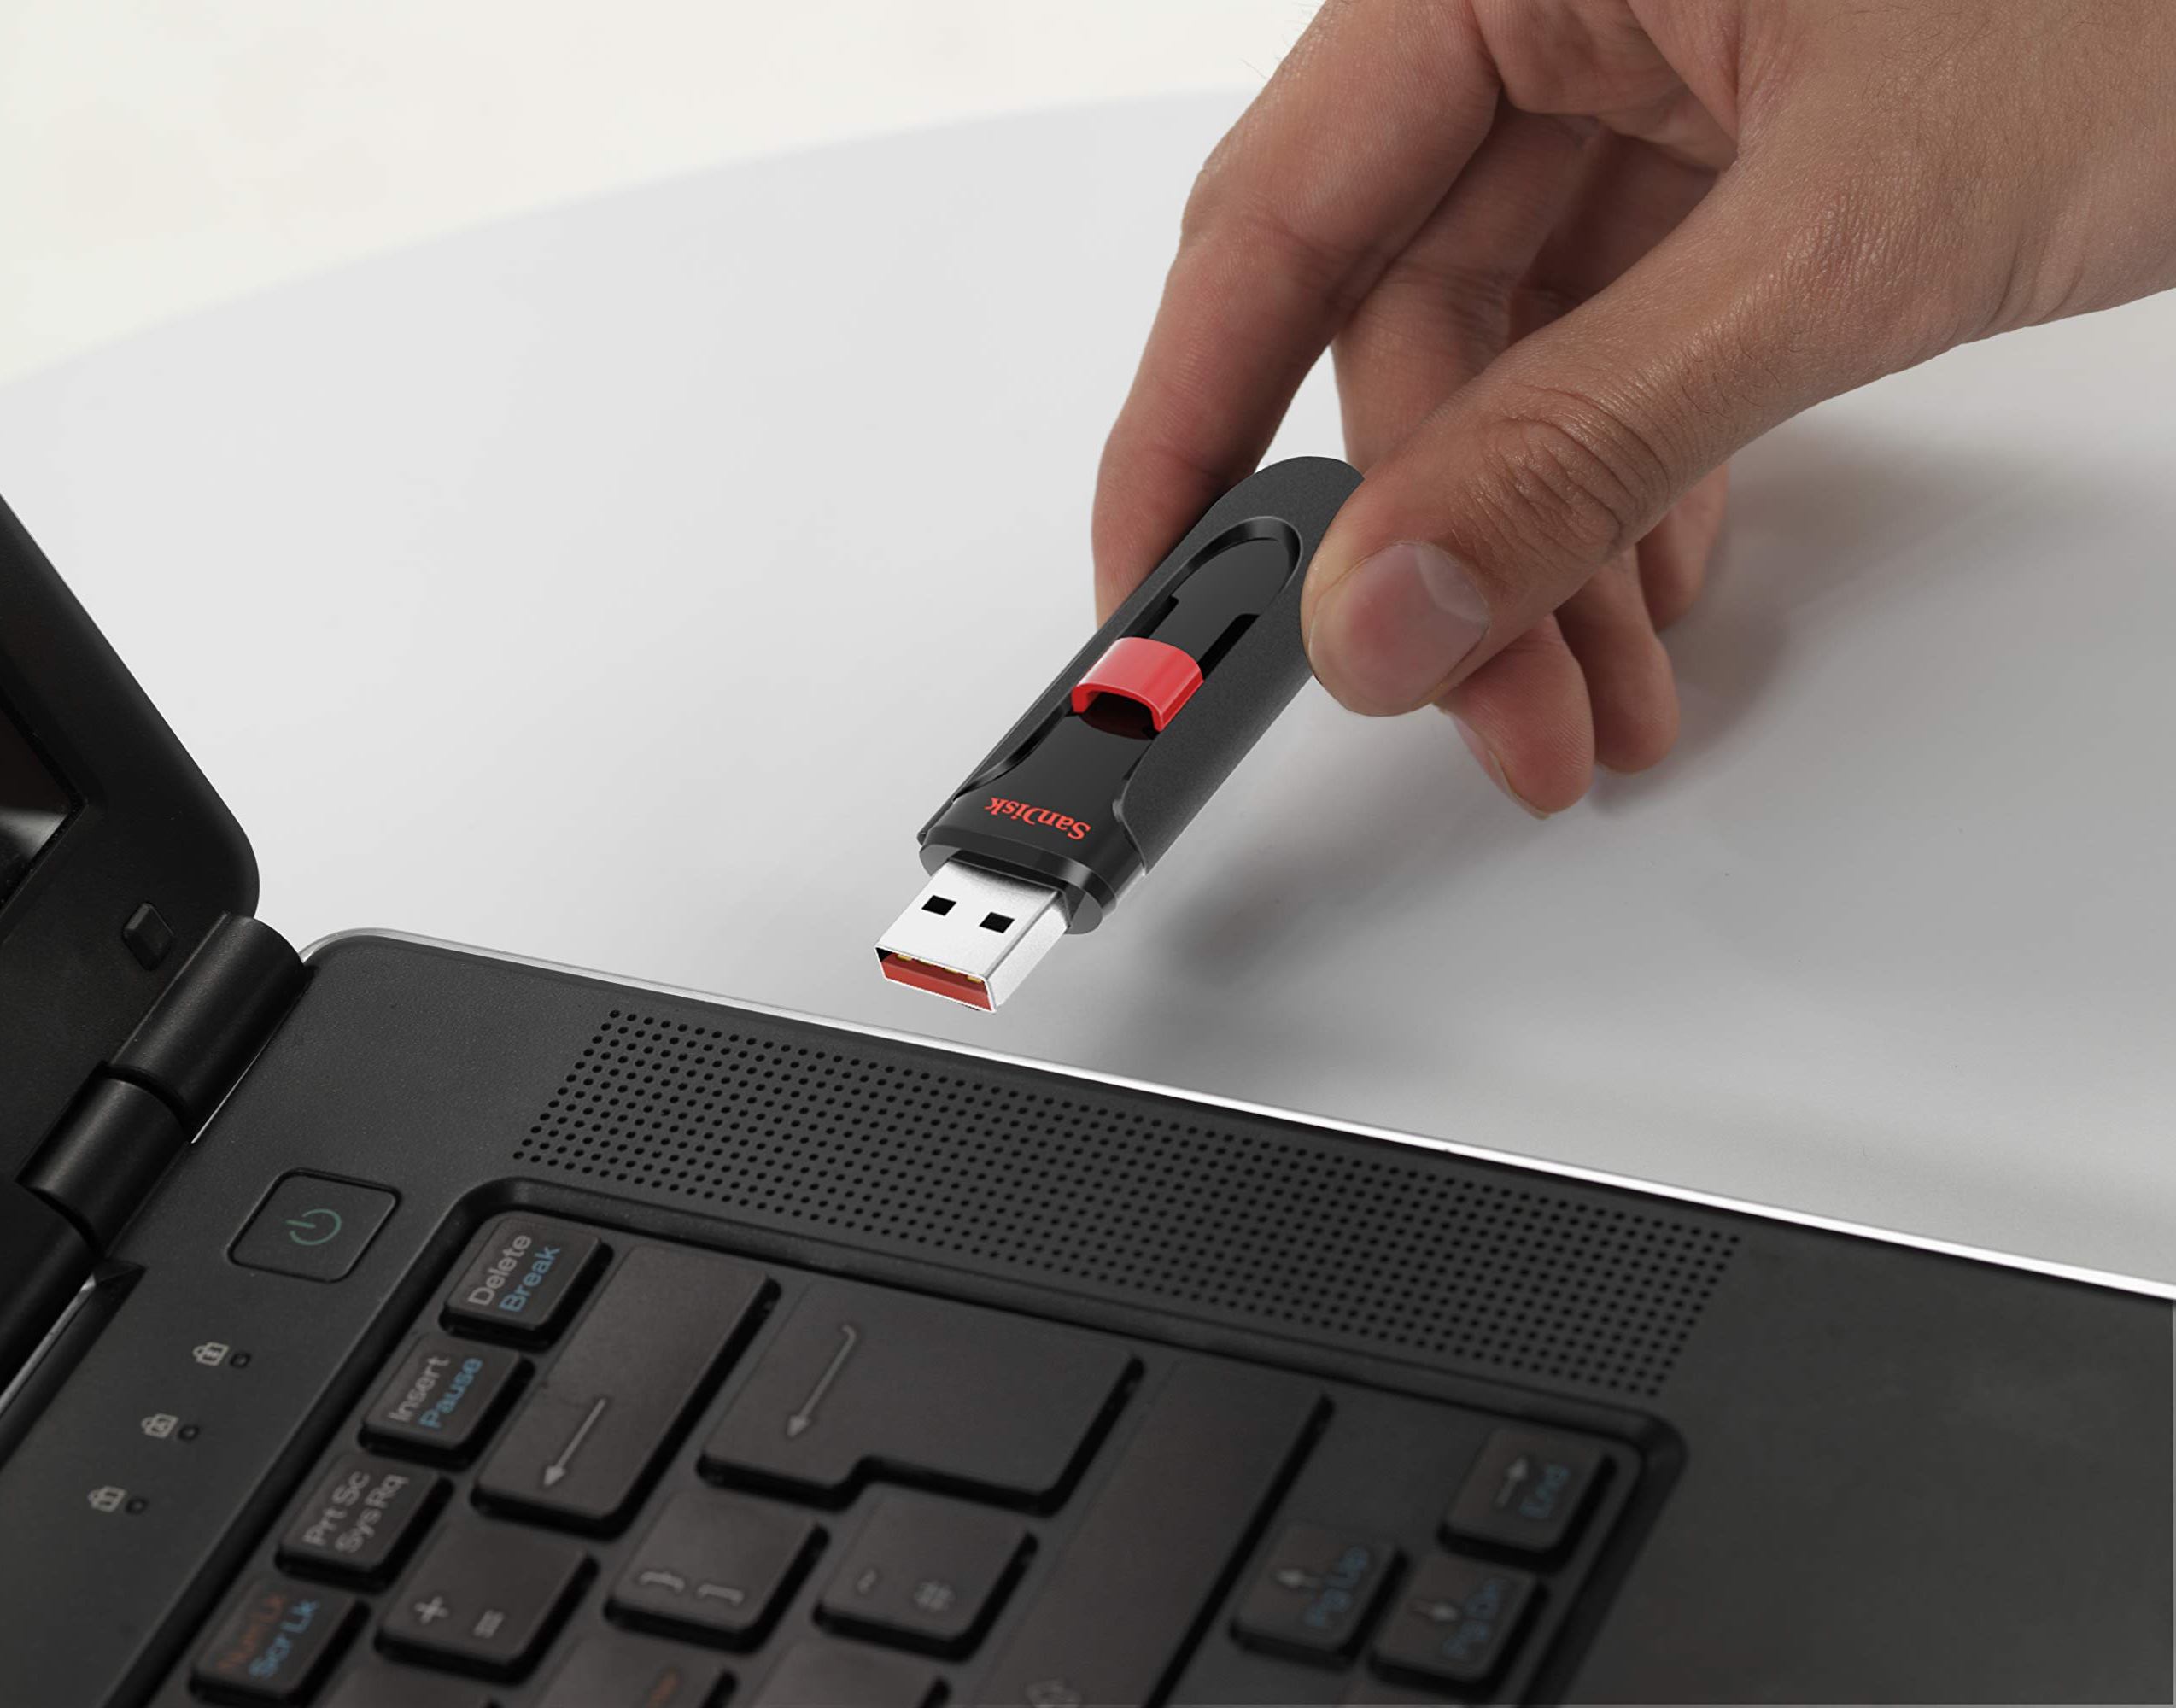 Stylov USB flashdisk SanDisk Cruzer Glide o kapacit 256 GB nabz snadn a bezpen zpsob sdlen, pesunu a zlohovn vaich nejdleitjch soubor.